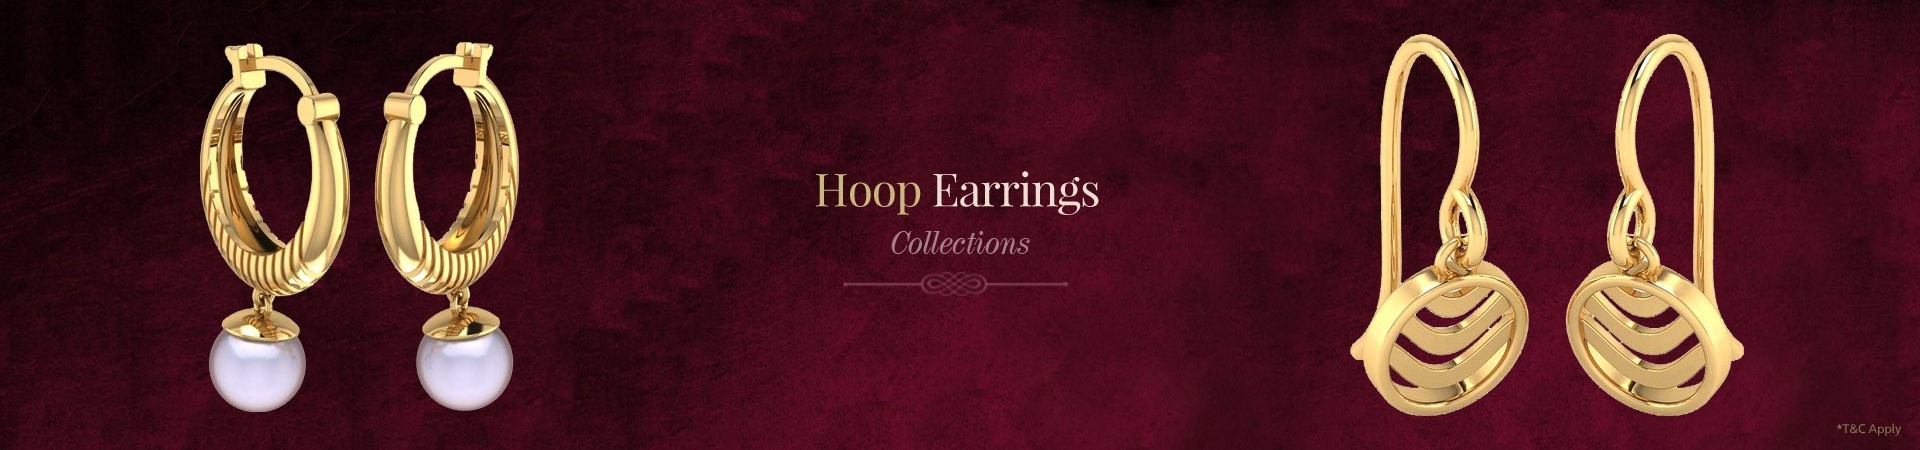 Gold Hoops Earrings Online 